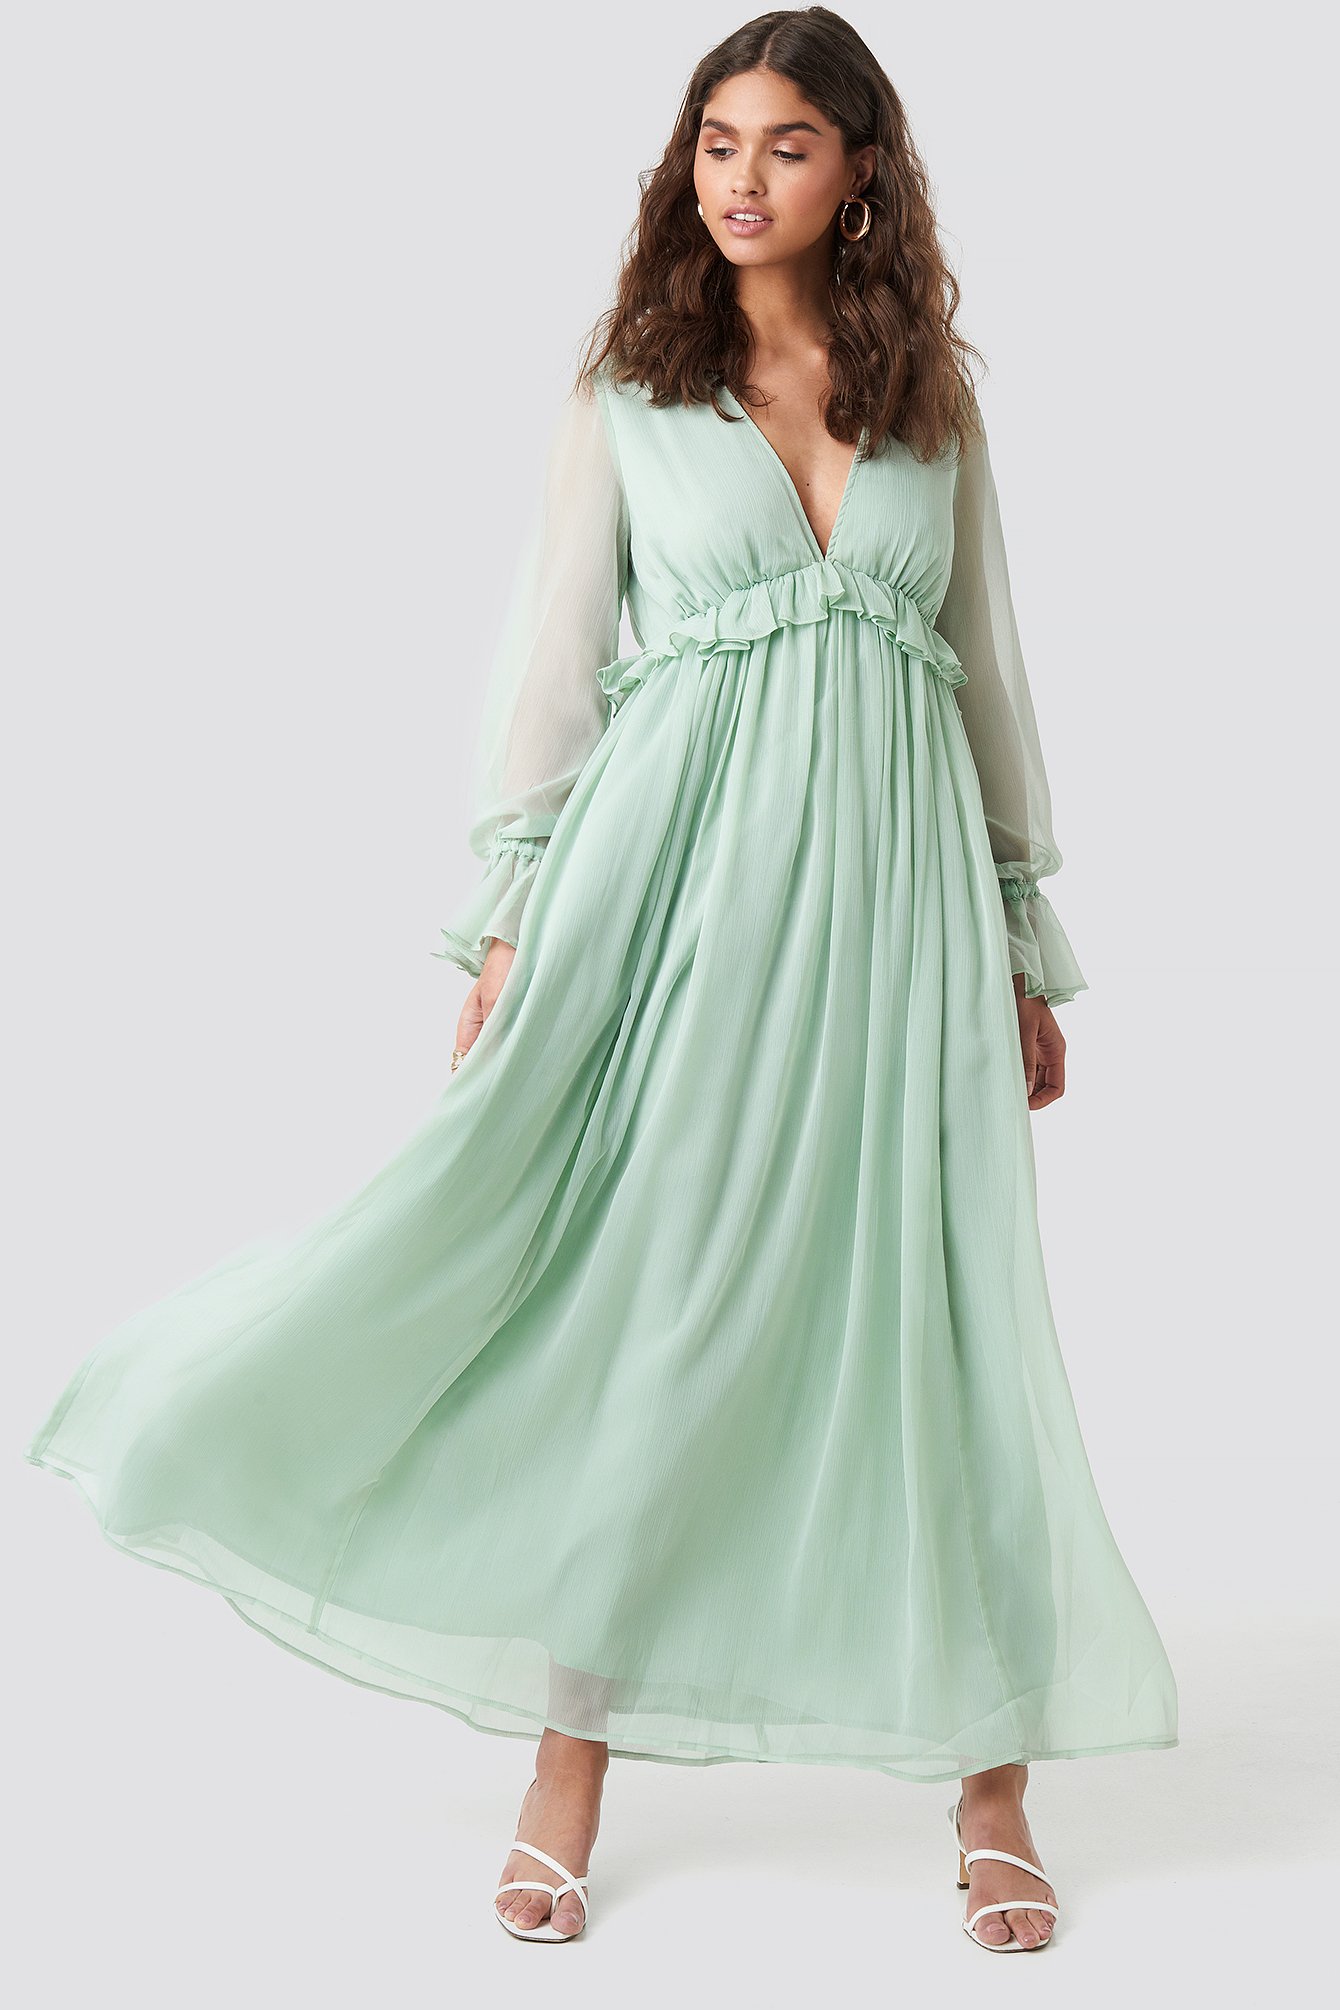 Kae Sutherland X Na-kd Deep V Neck Maxi Dress - Green In Mint